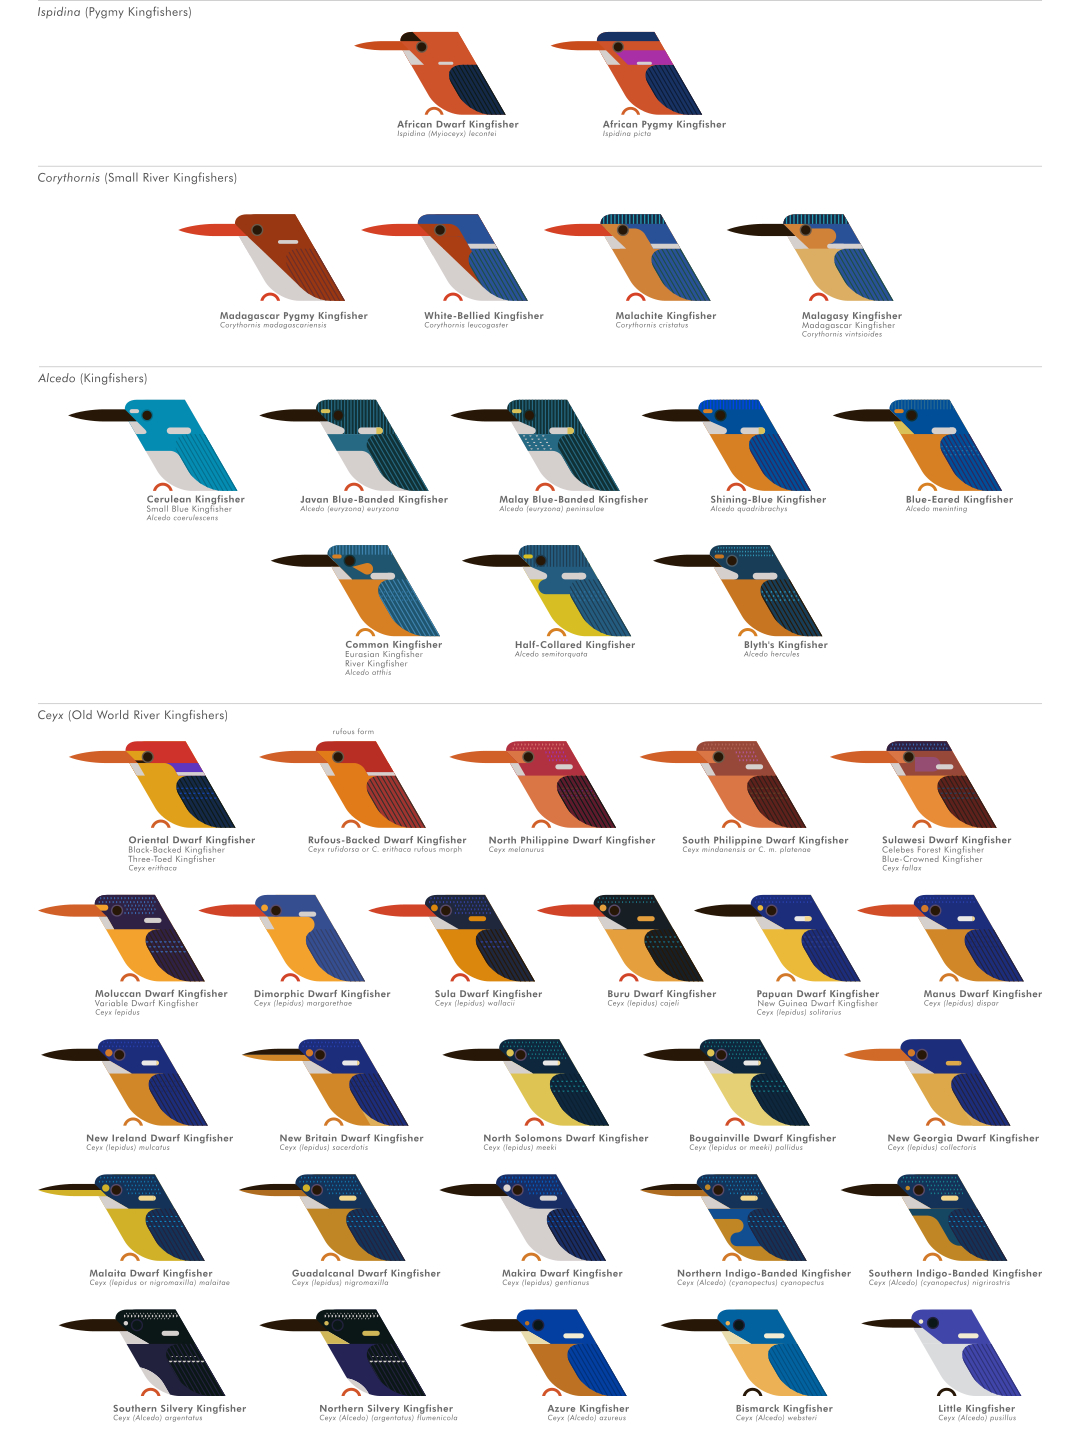 scott partridge - ave - avian vector encyclopedia - kingfishers alcedinidae CORACIIFORMES - bird vector art